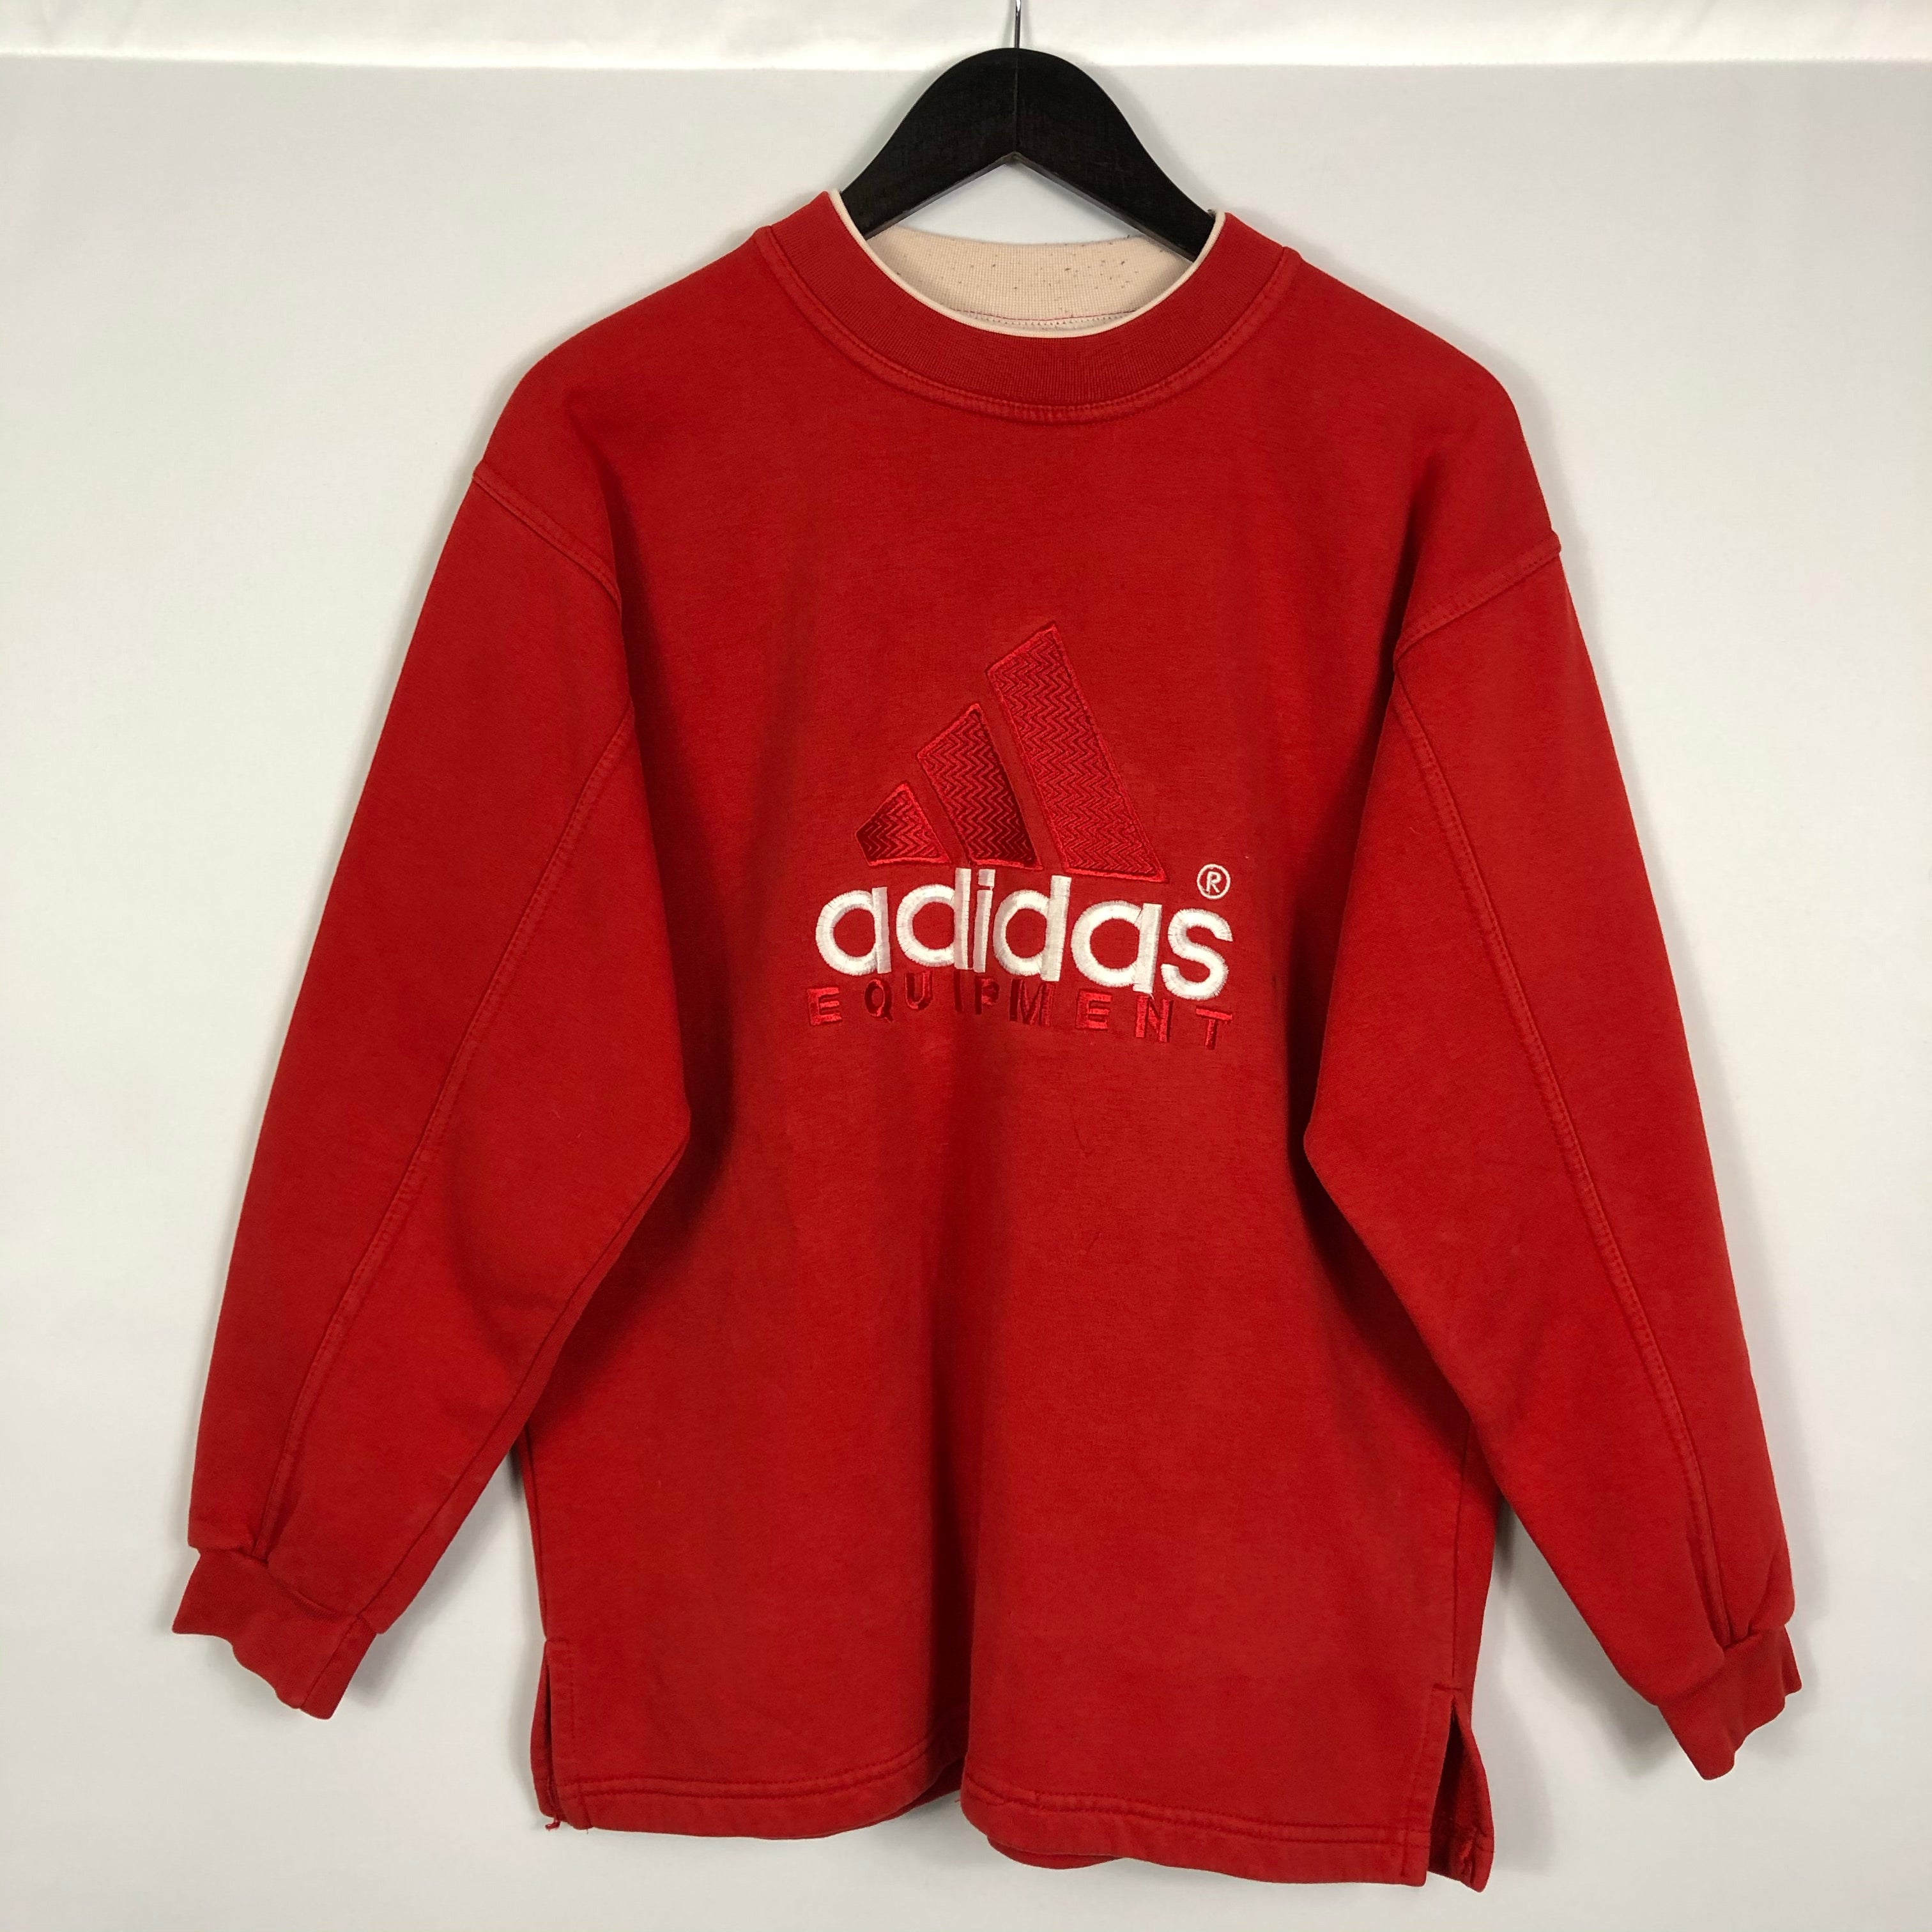 Vintage Adidas Equipment Sweatshirt in Red - Women’s Medium/Men’s Smal ...